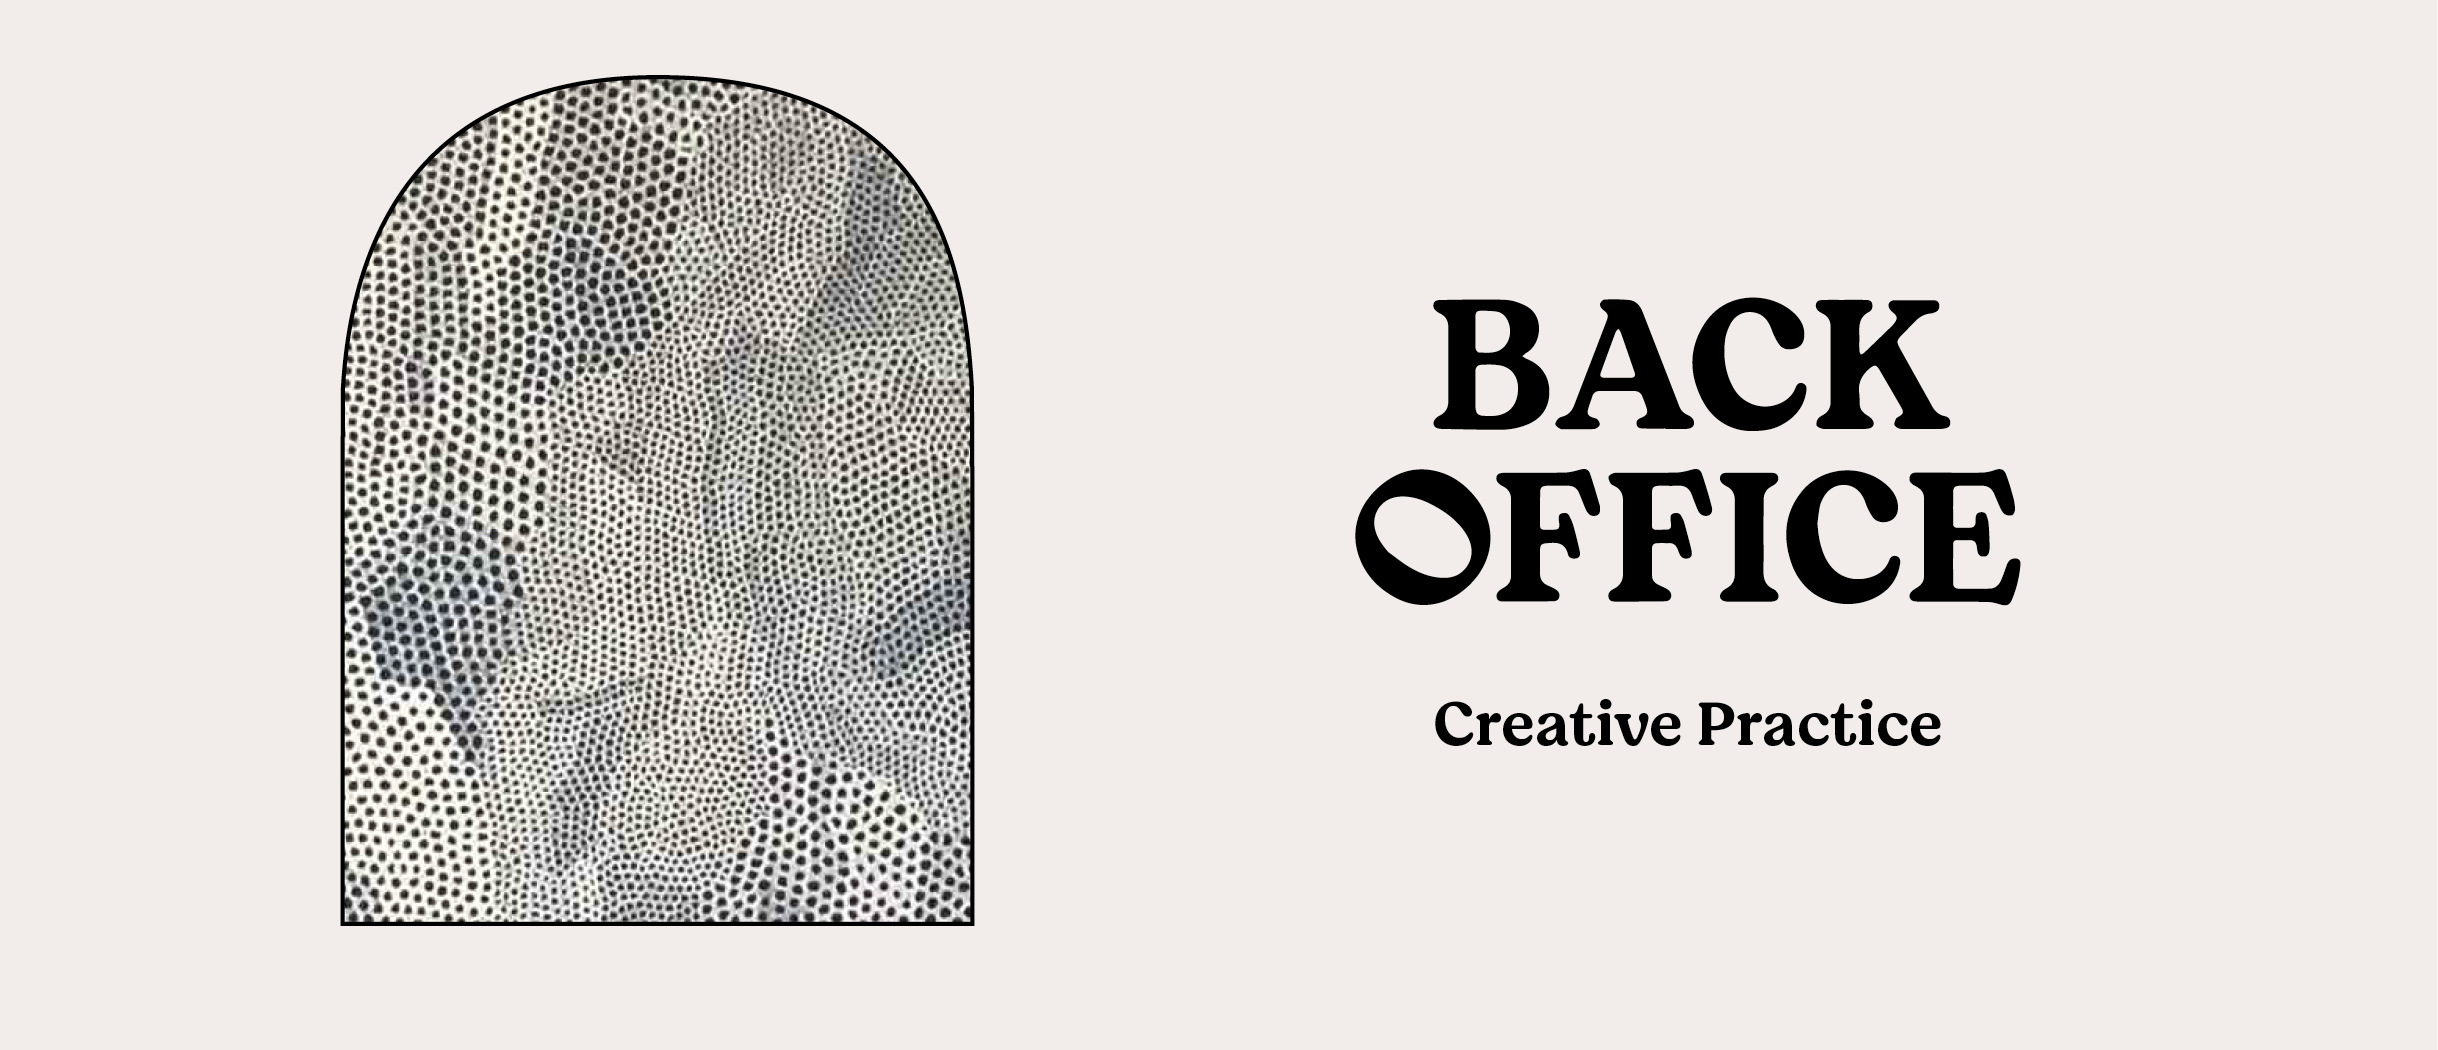 Back Office: Creative Practice